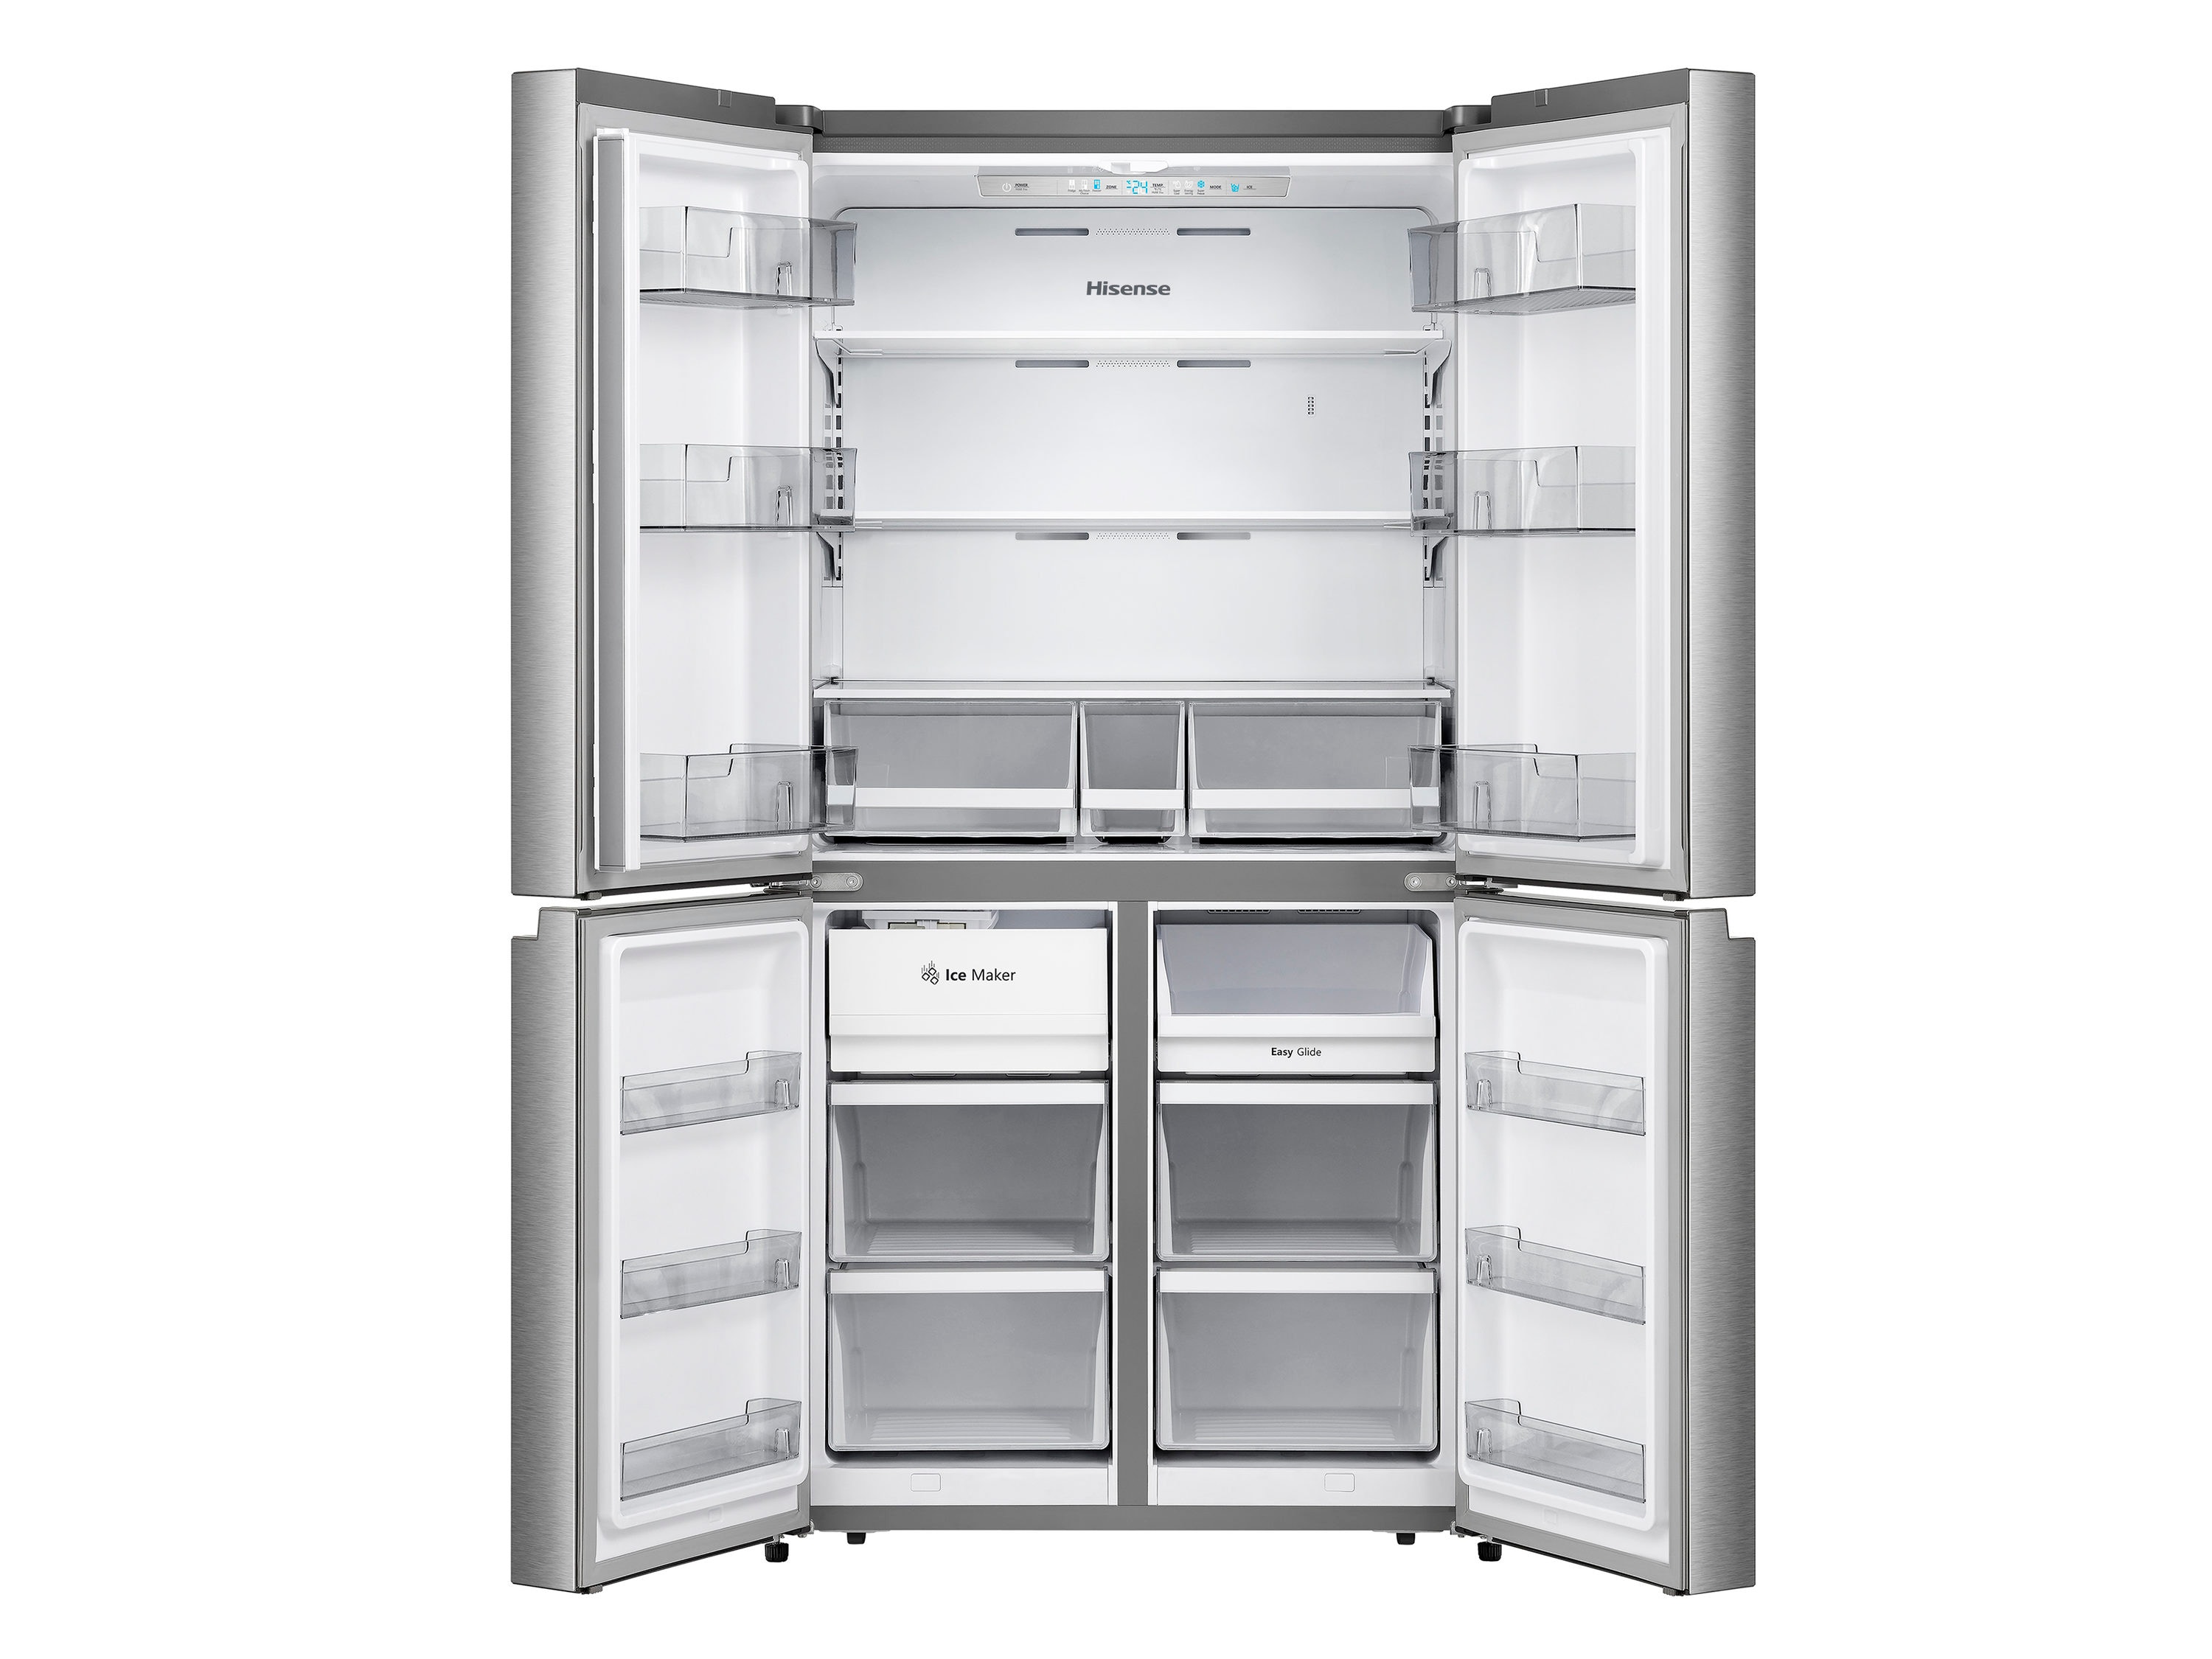 Hisense 21.6-cu ft 4-Door Counter-depth Refrigerator Look) (Stainless at French Refrigerators Door the Maker with department in Ice French Door